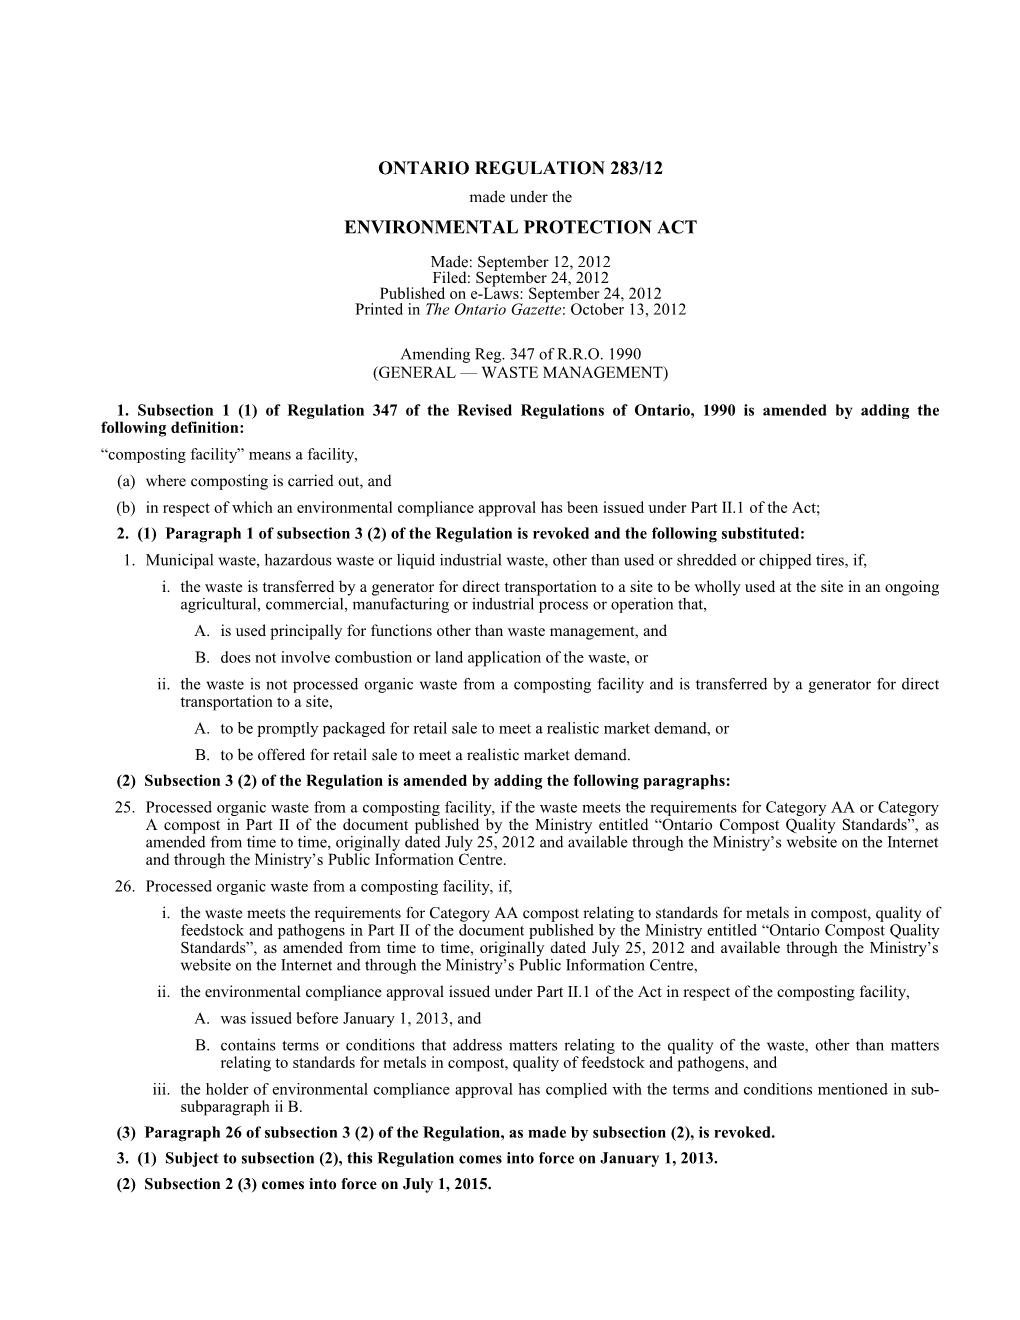 ENVIRONMENTAL PROTECTION ACT - O. Reg. 283/12